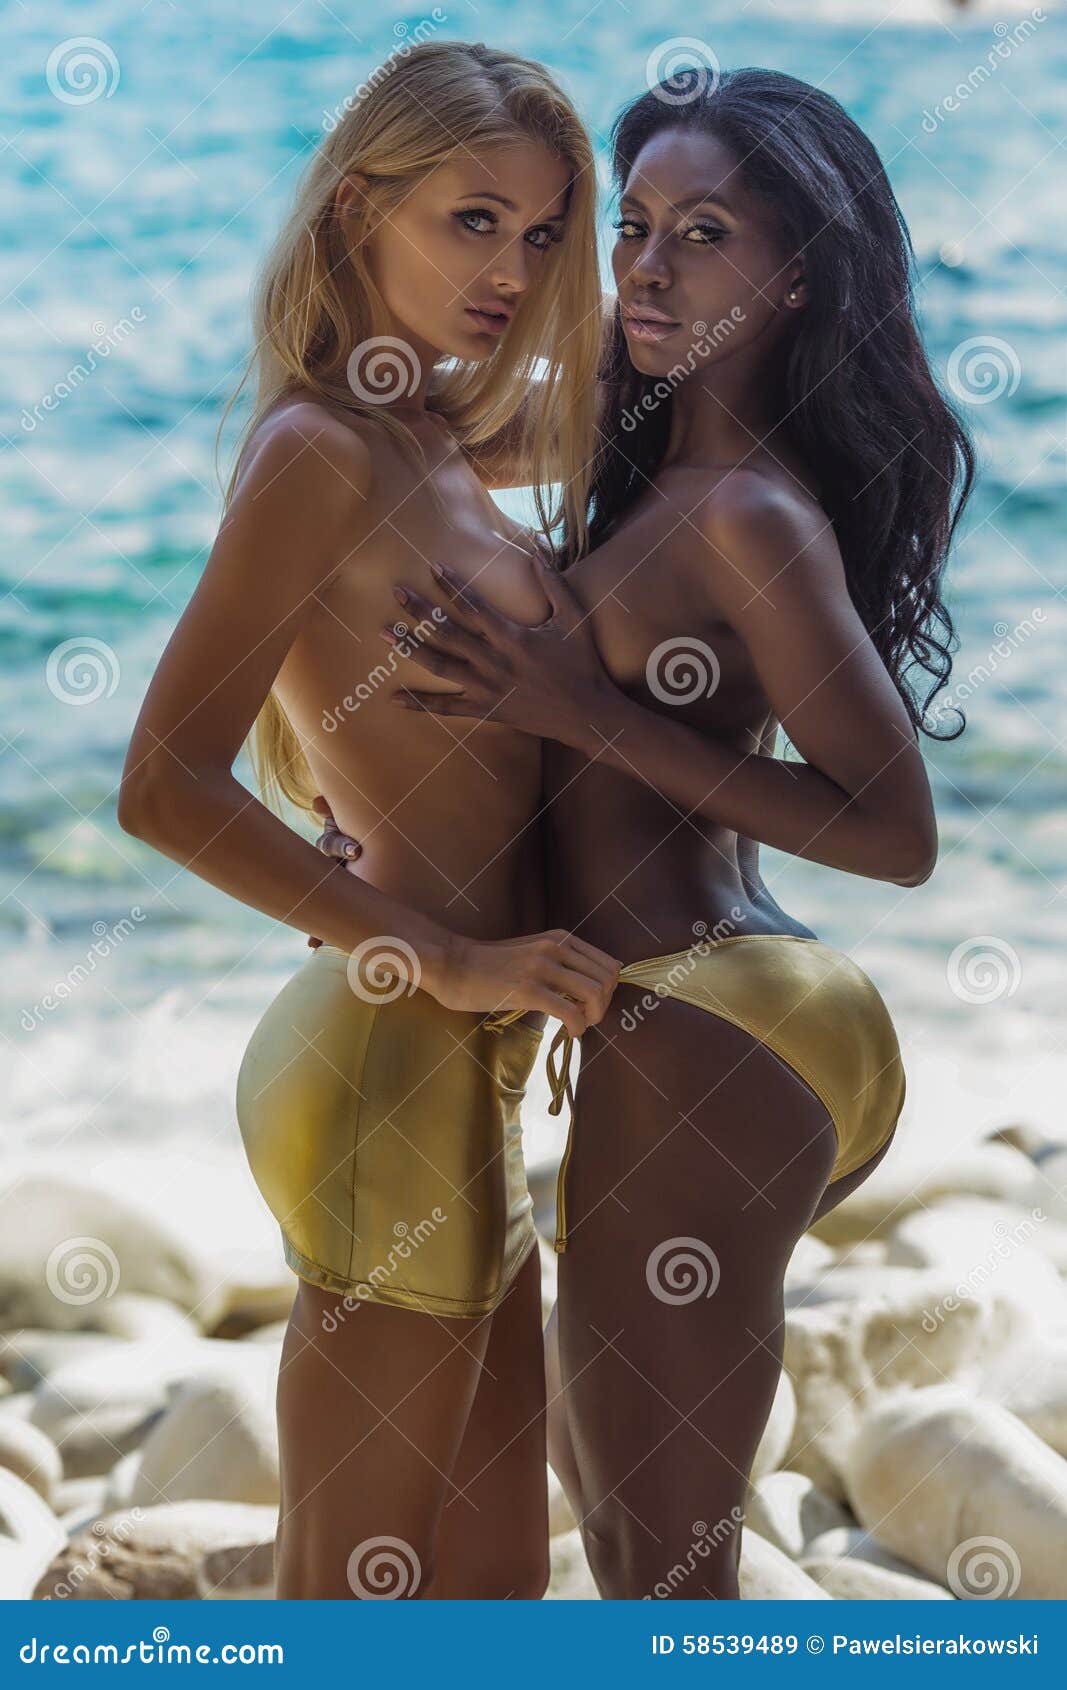 Beach girls nude